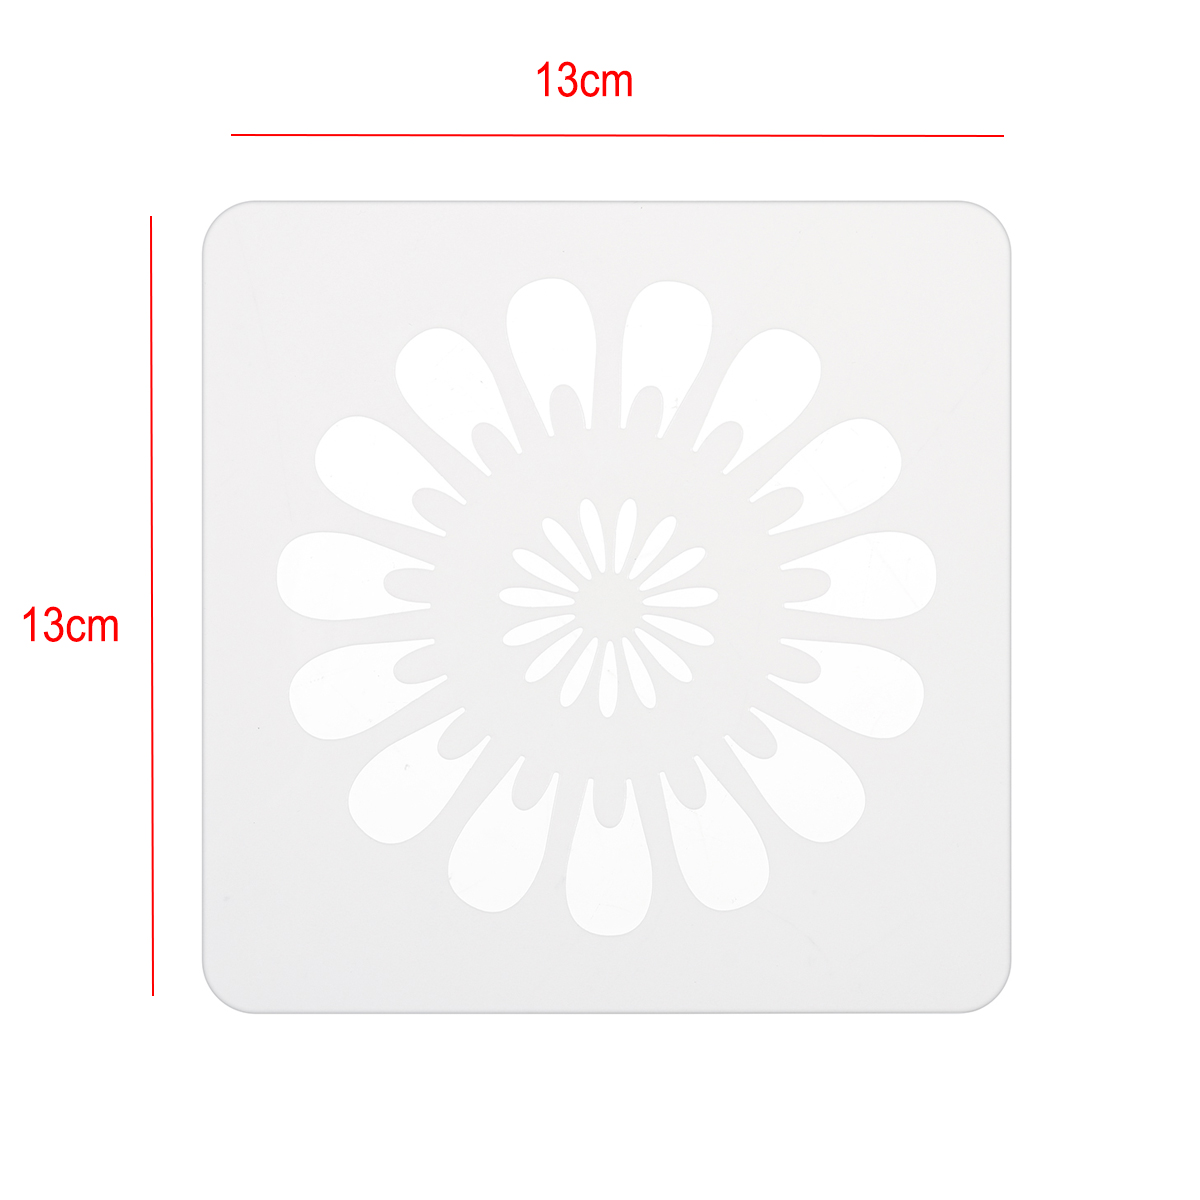 13x13cm-16Pcs-White-Plastic-Mandala-Paint-Tray-Openwork-Painting-Template-1708803-11